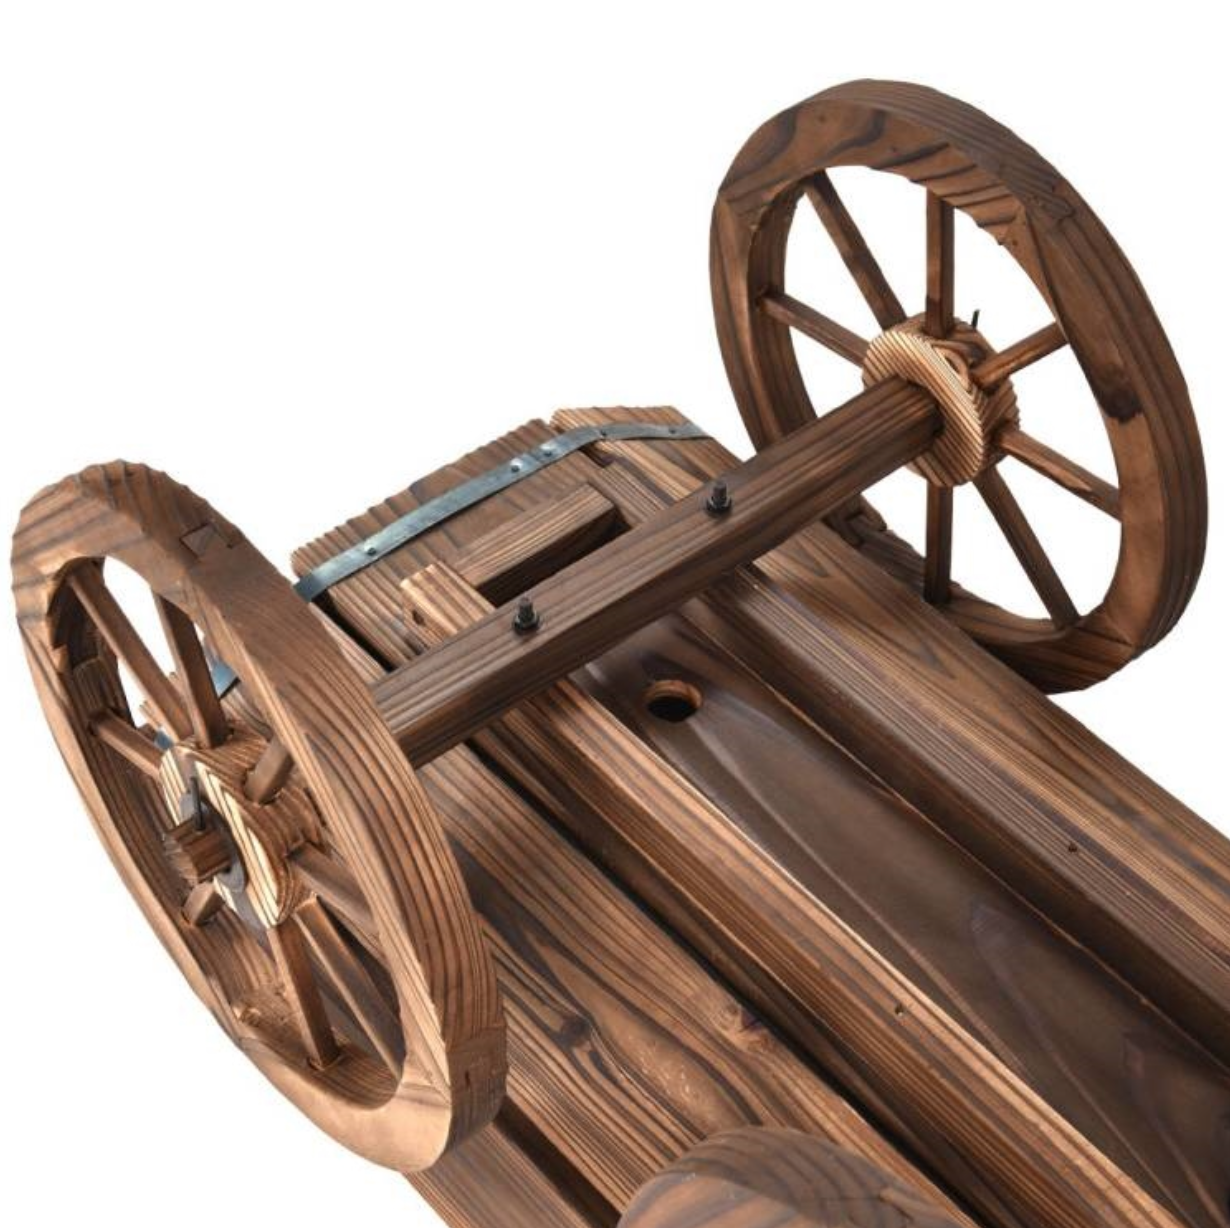 Fir Wood Barrel Planter Wagon on Wooden Wheels